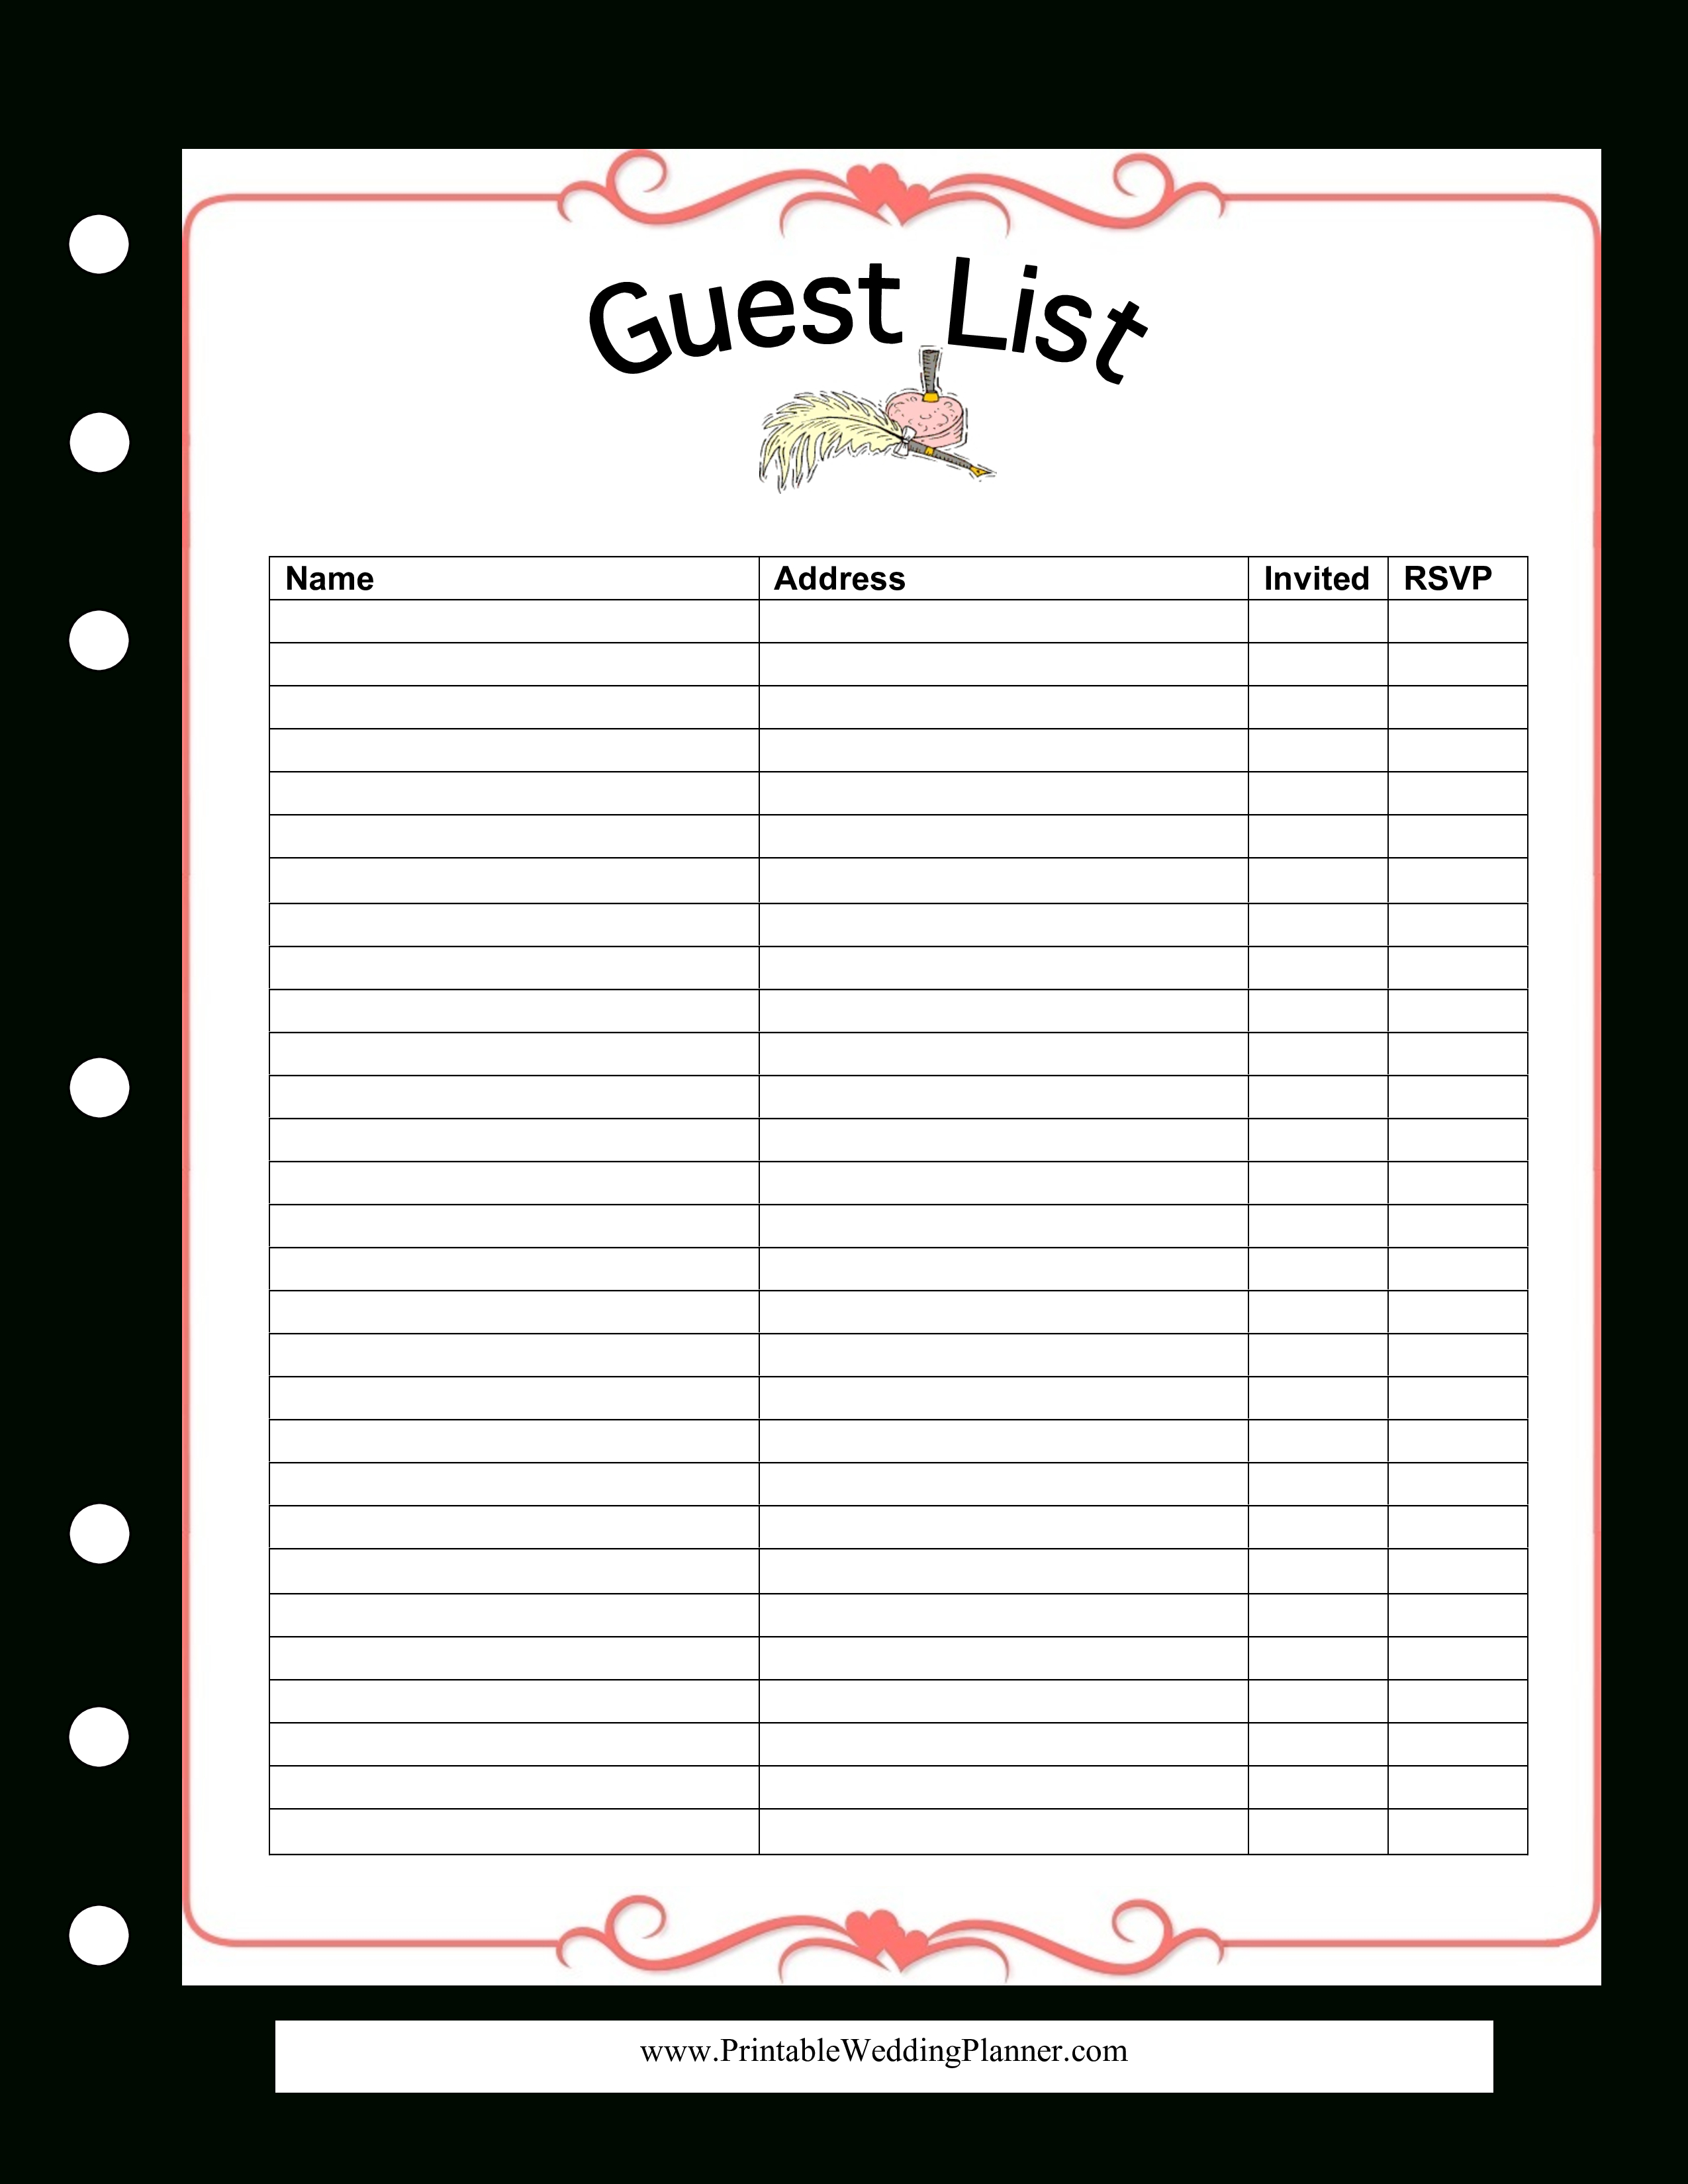 Wedding Address Spreadsheet throughout Free Wedding Guest List